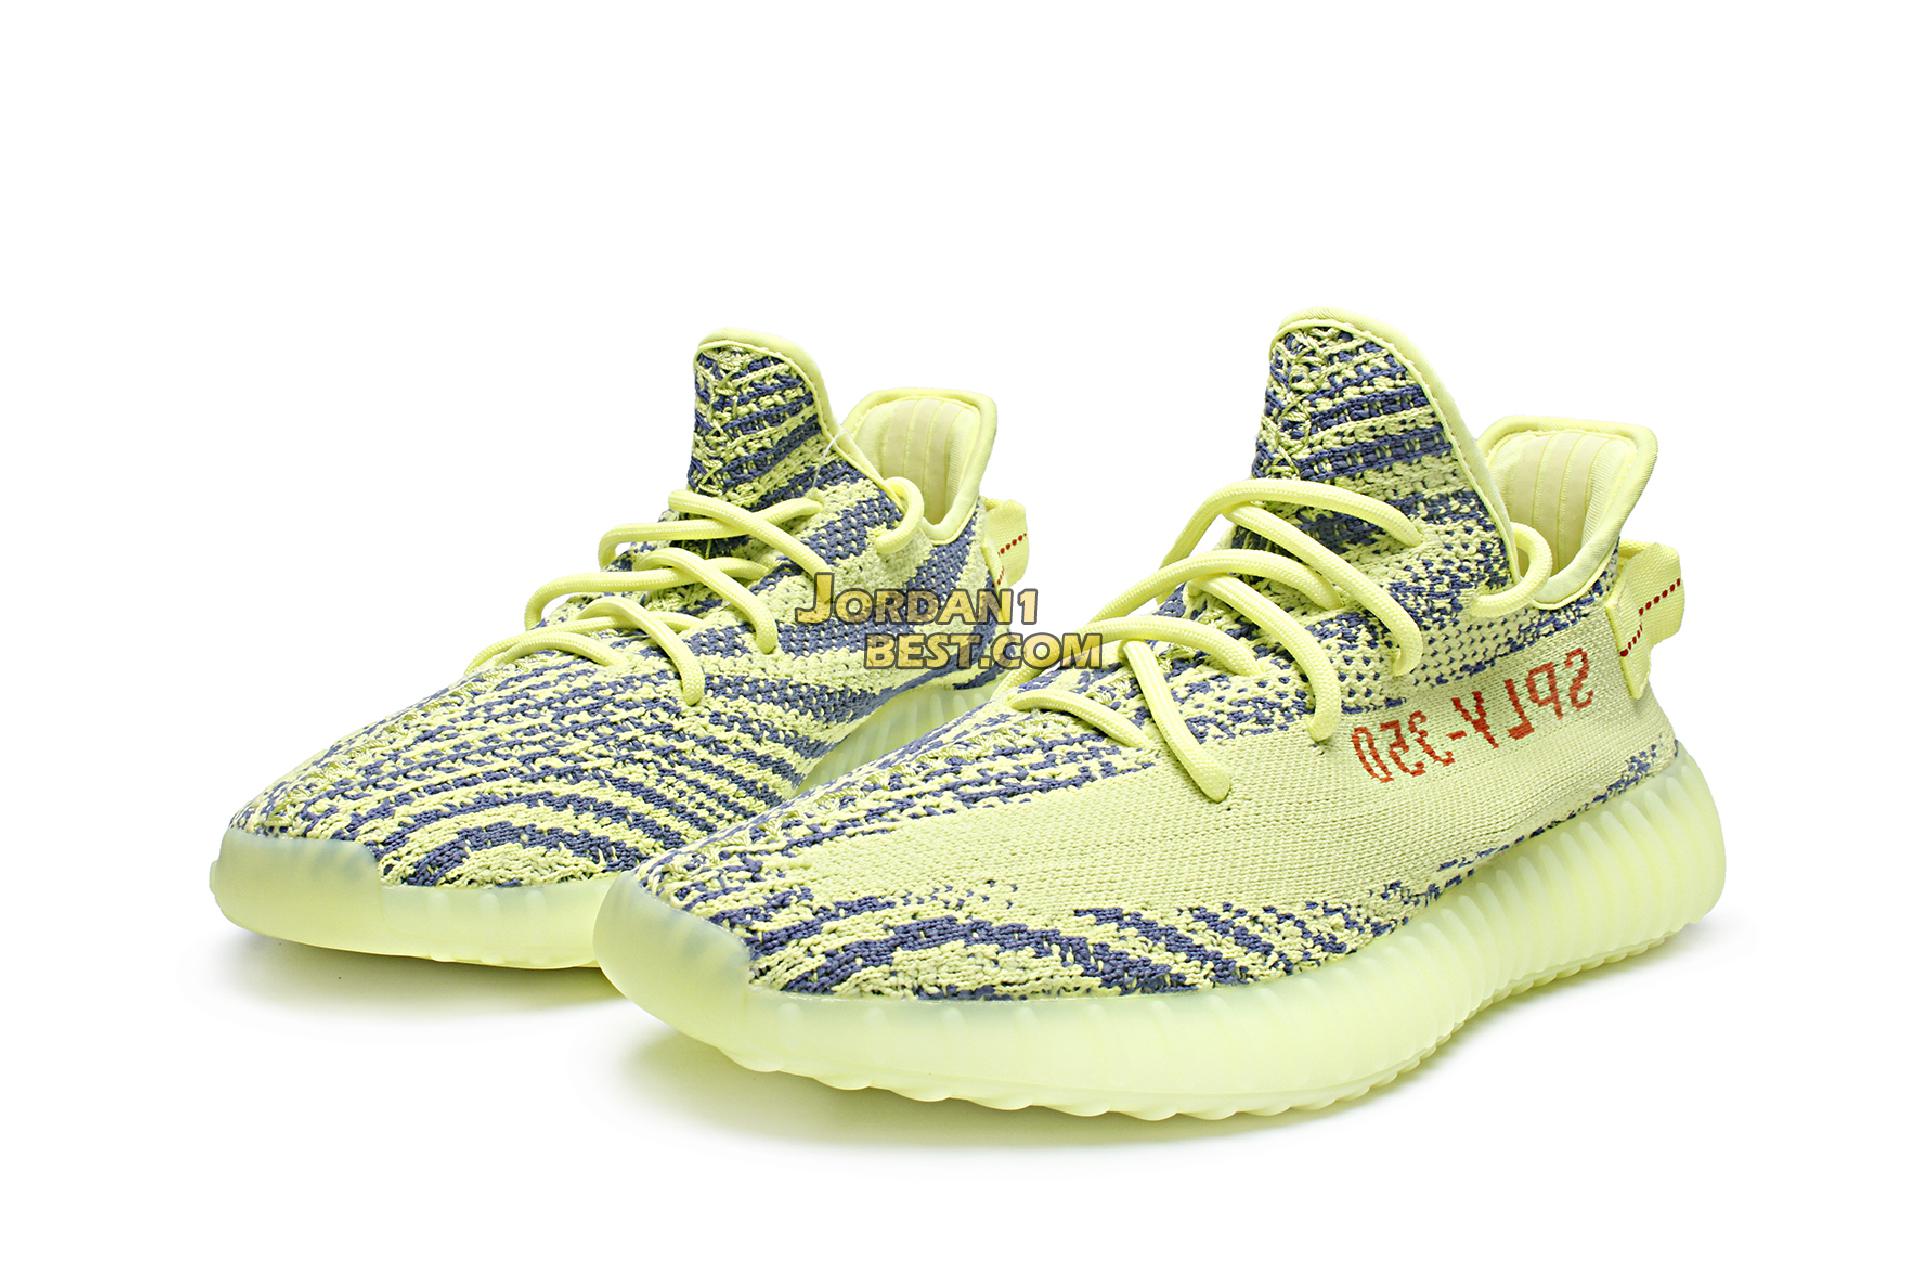 Adidas Yeezy Boost 350 V2 "Semi Frozen Yellow" B37572